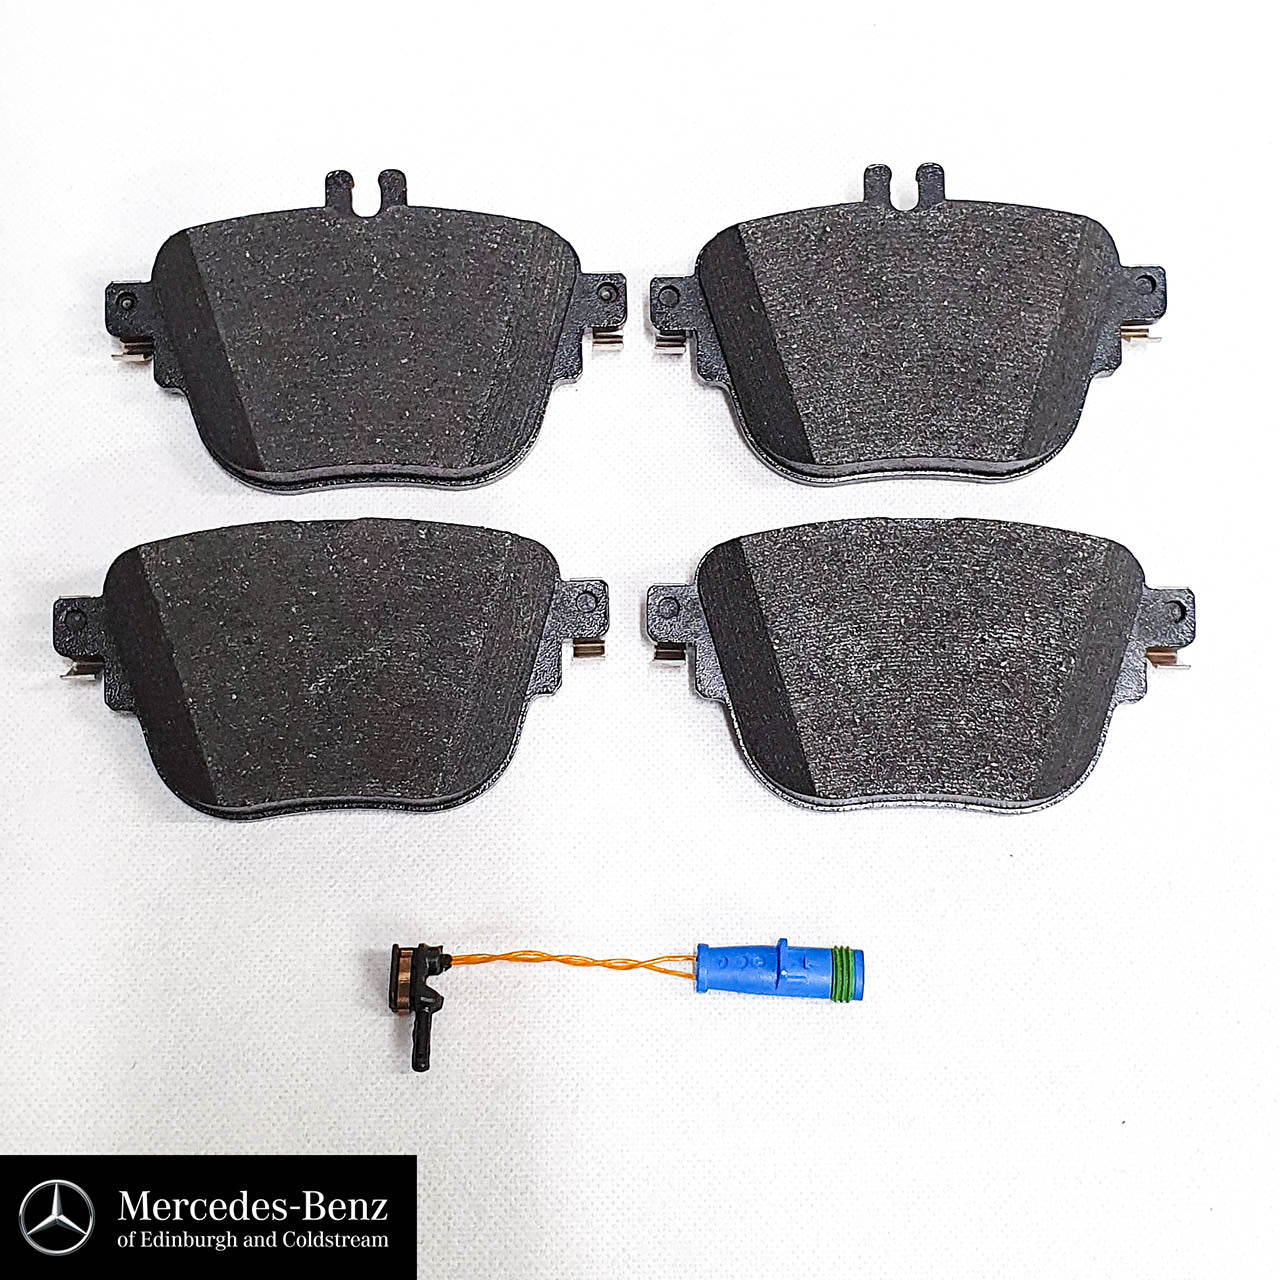 Genuine Mercedes-Benz brake pads & wear sensor - REAR - E Class